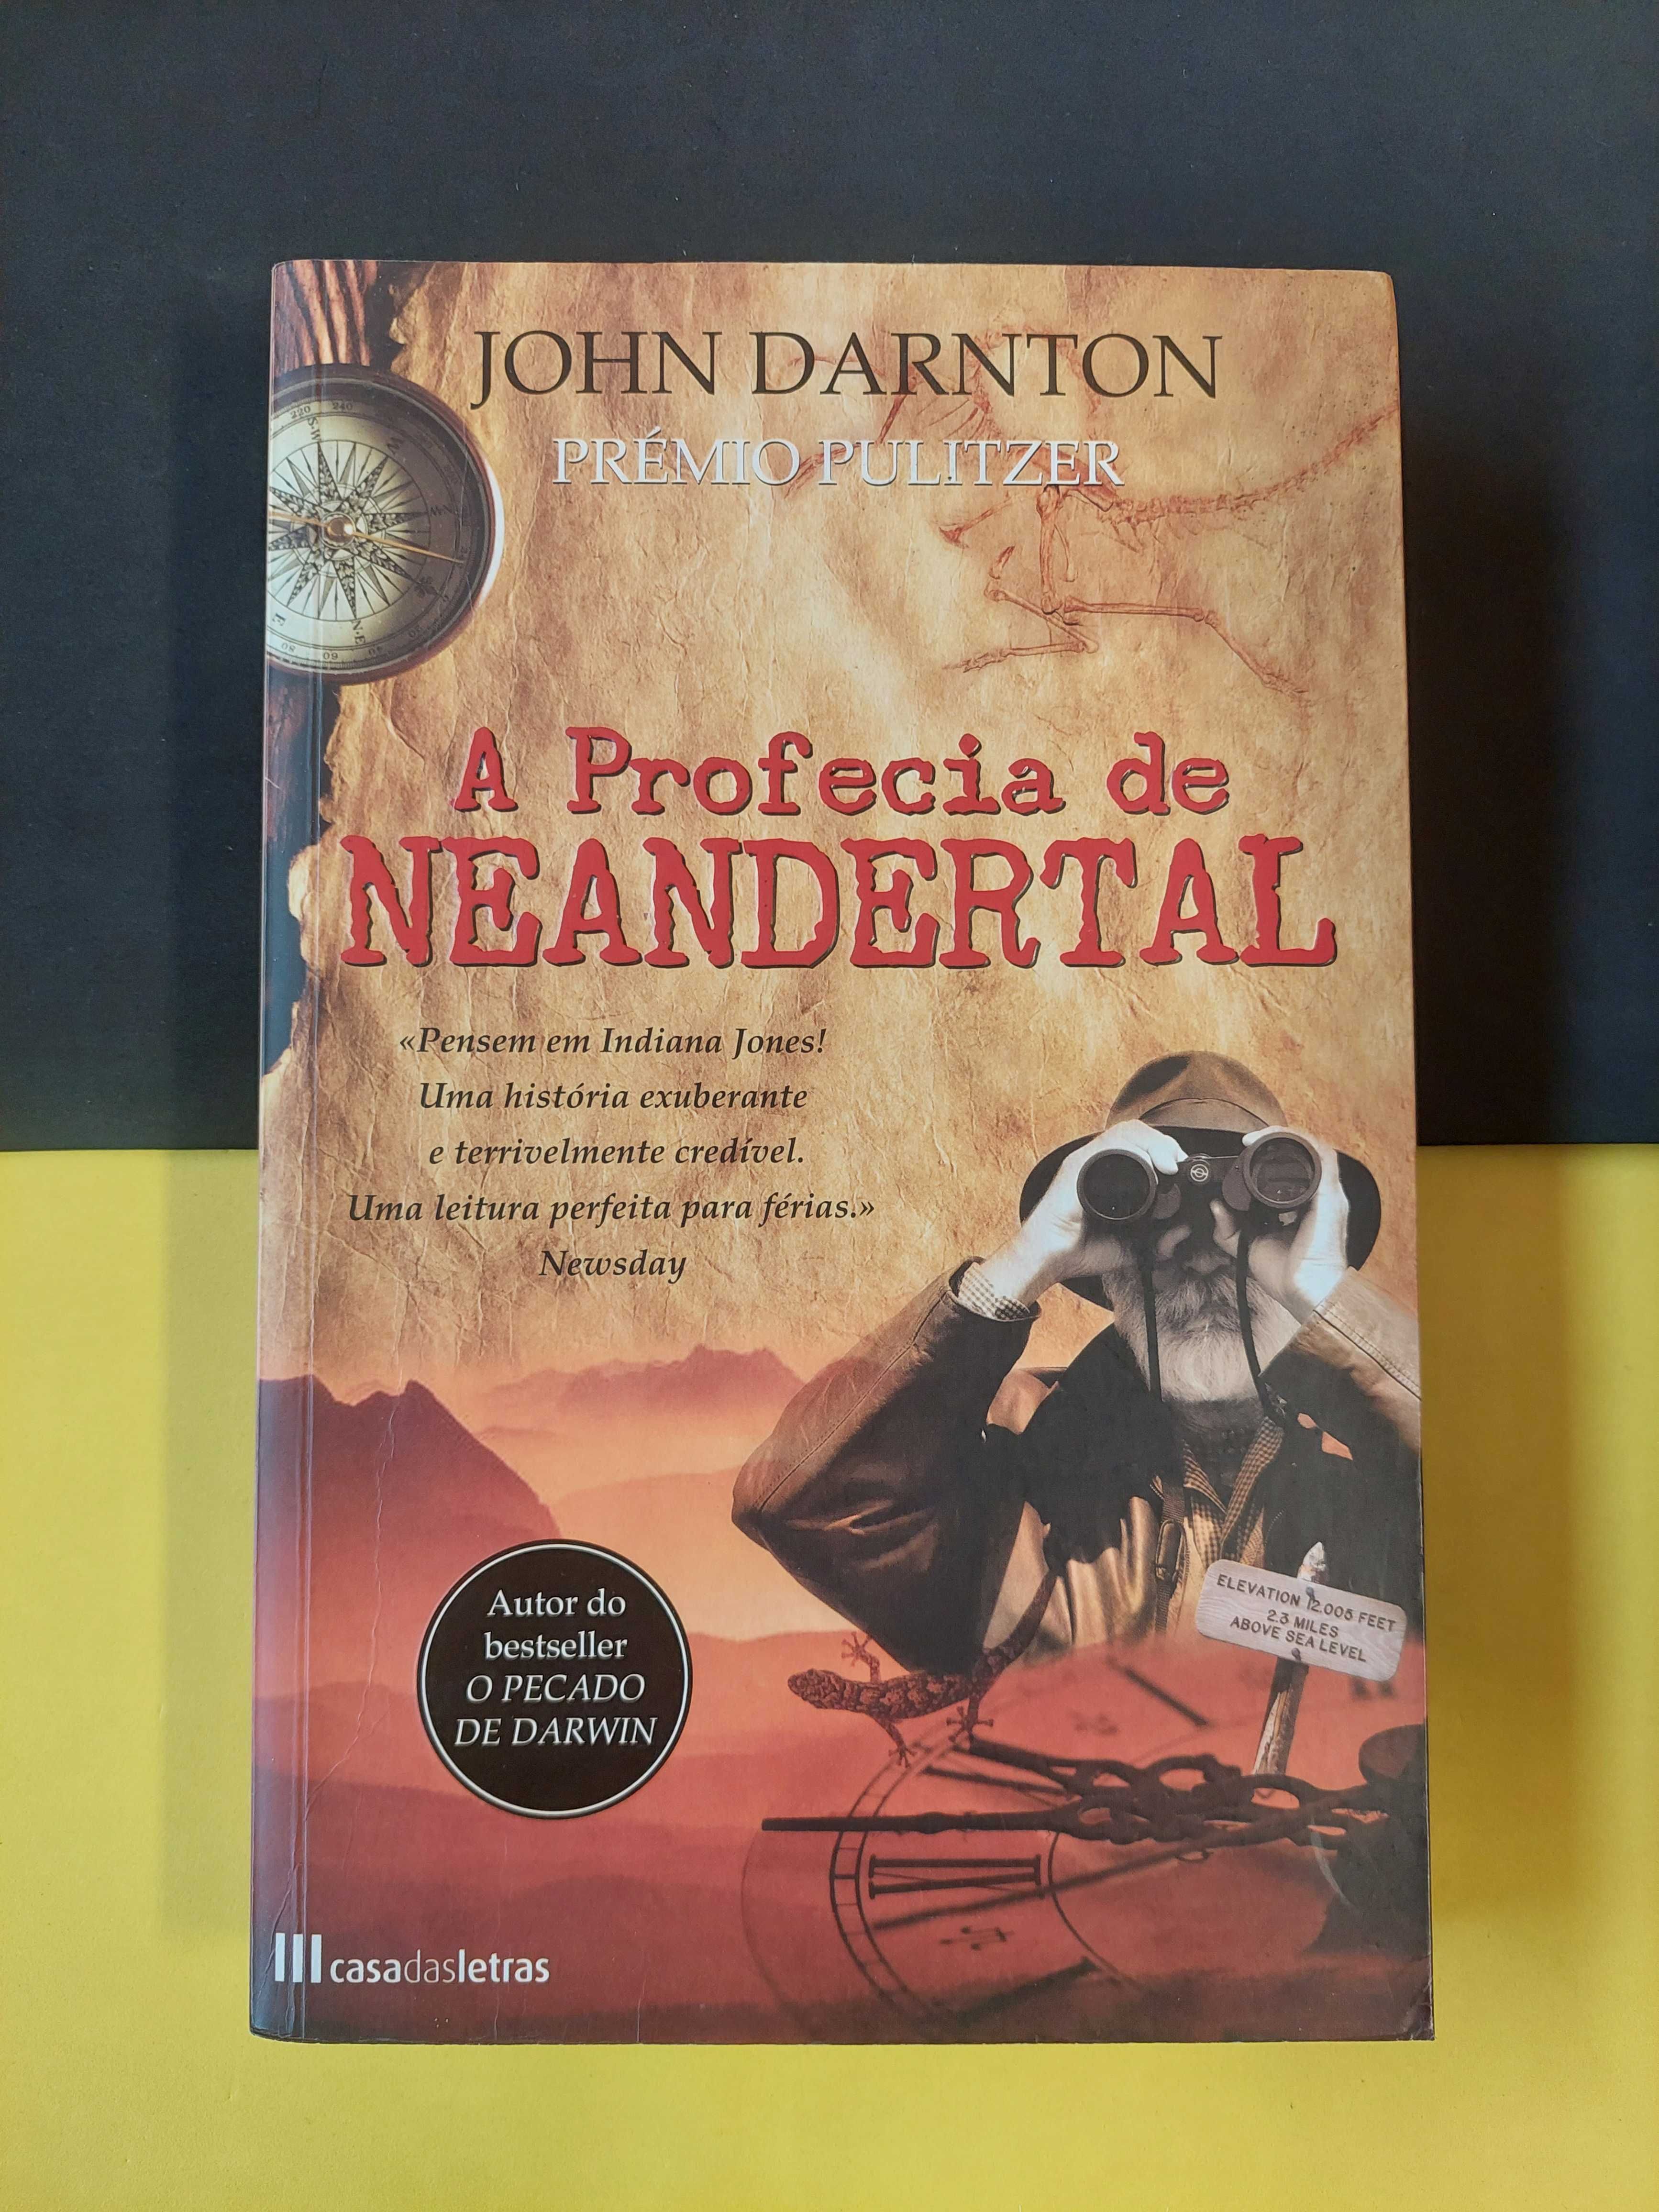 John Darnton - A profecia de Neandertal